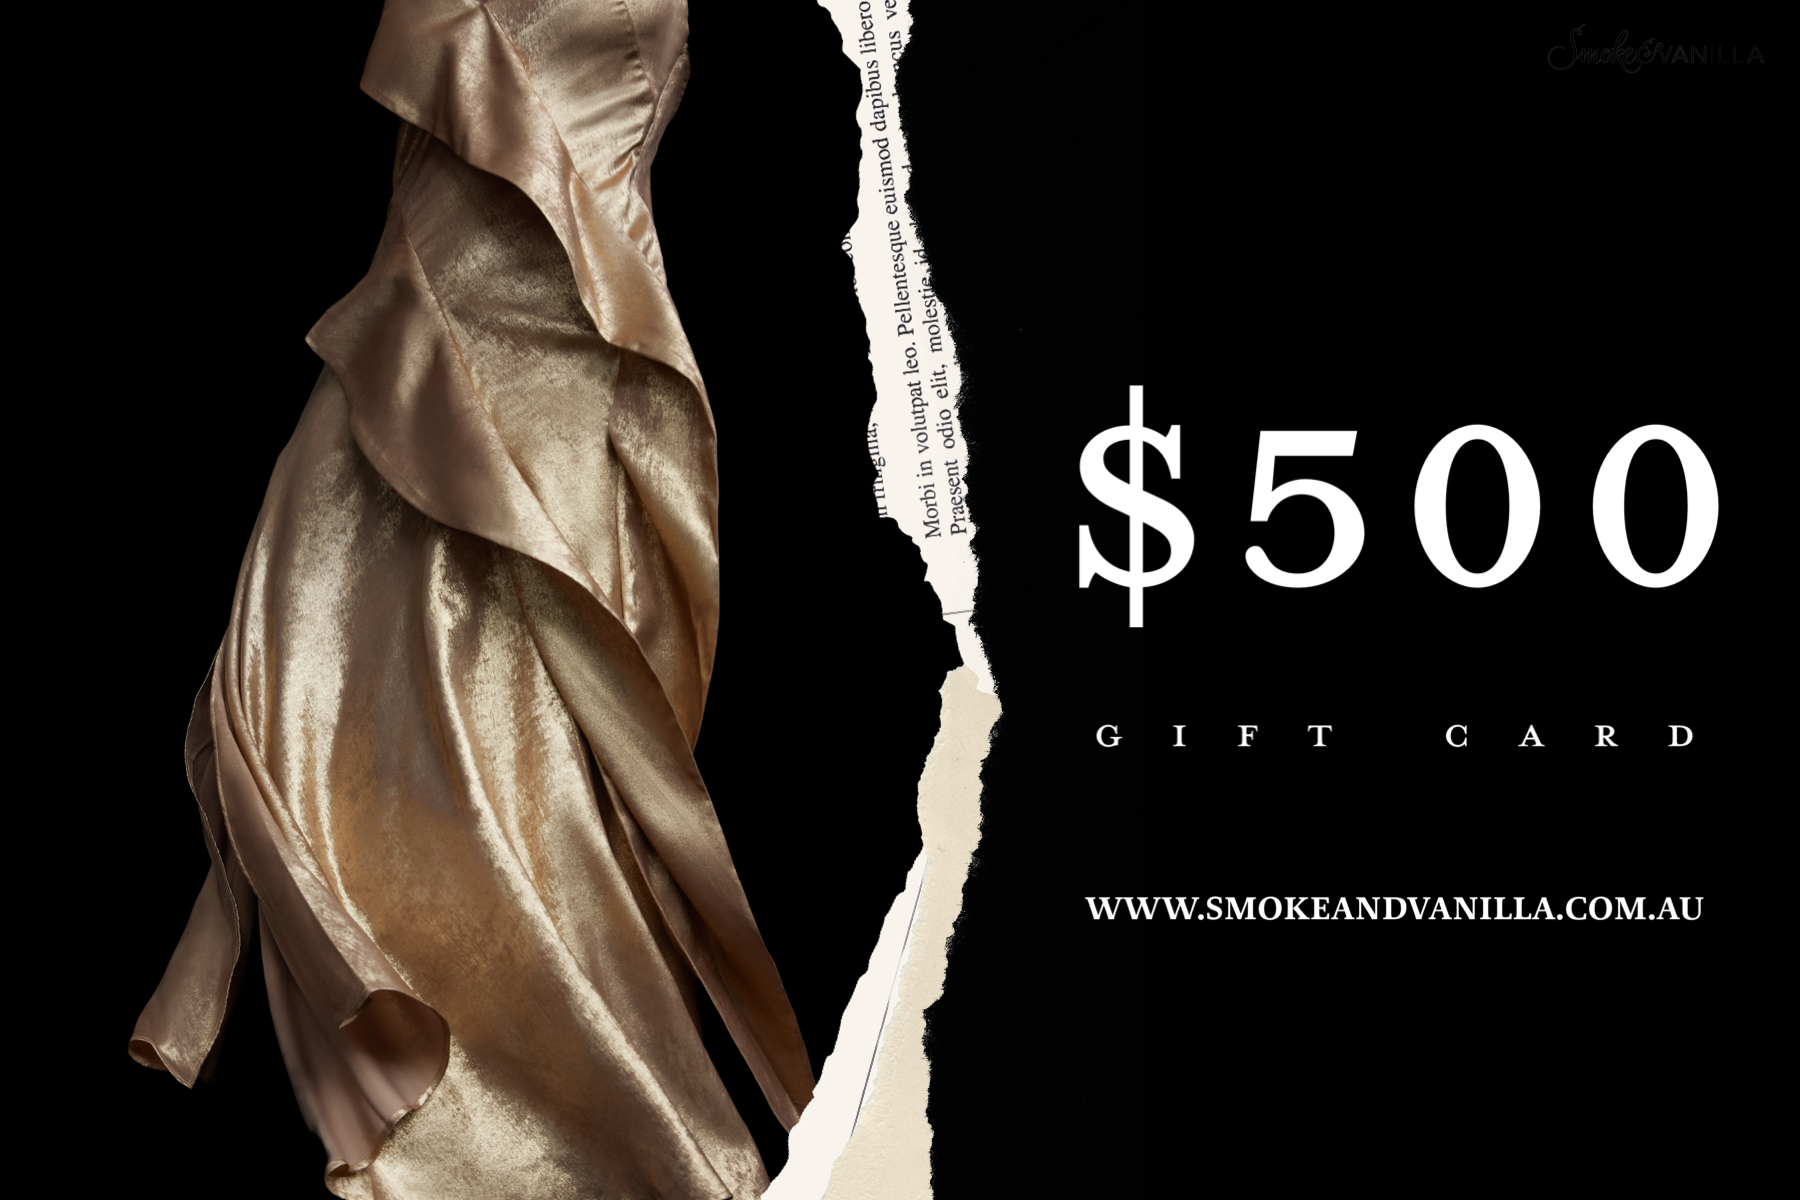 Smoke & Vanilla Online Gift Card - $500